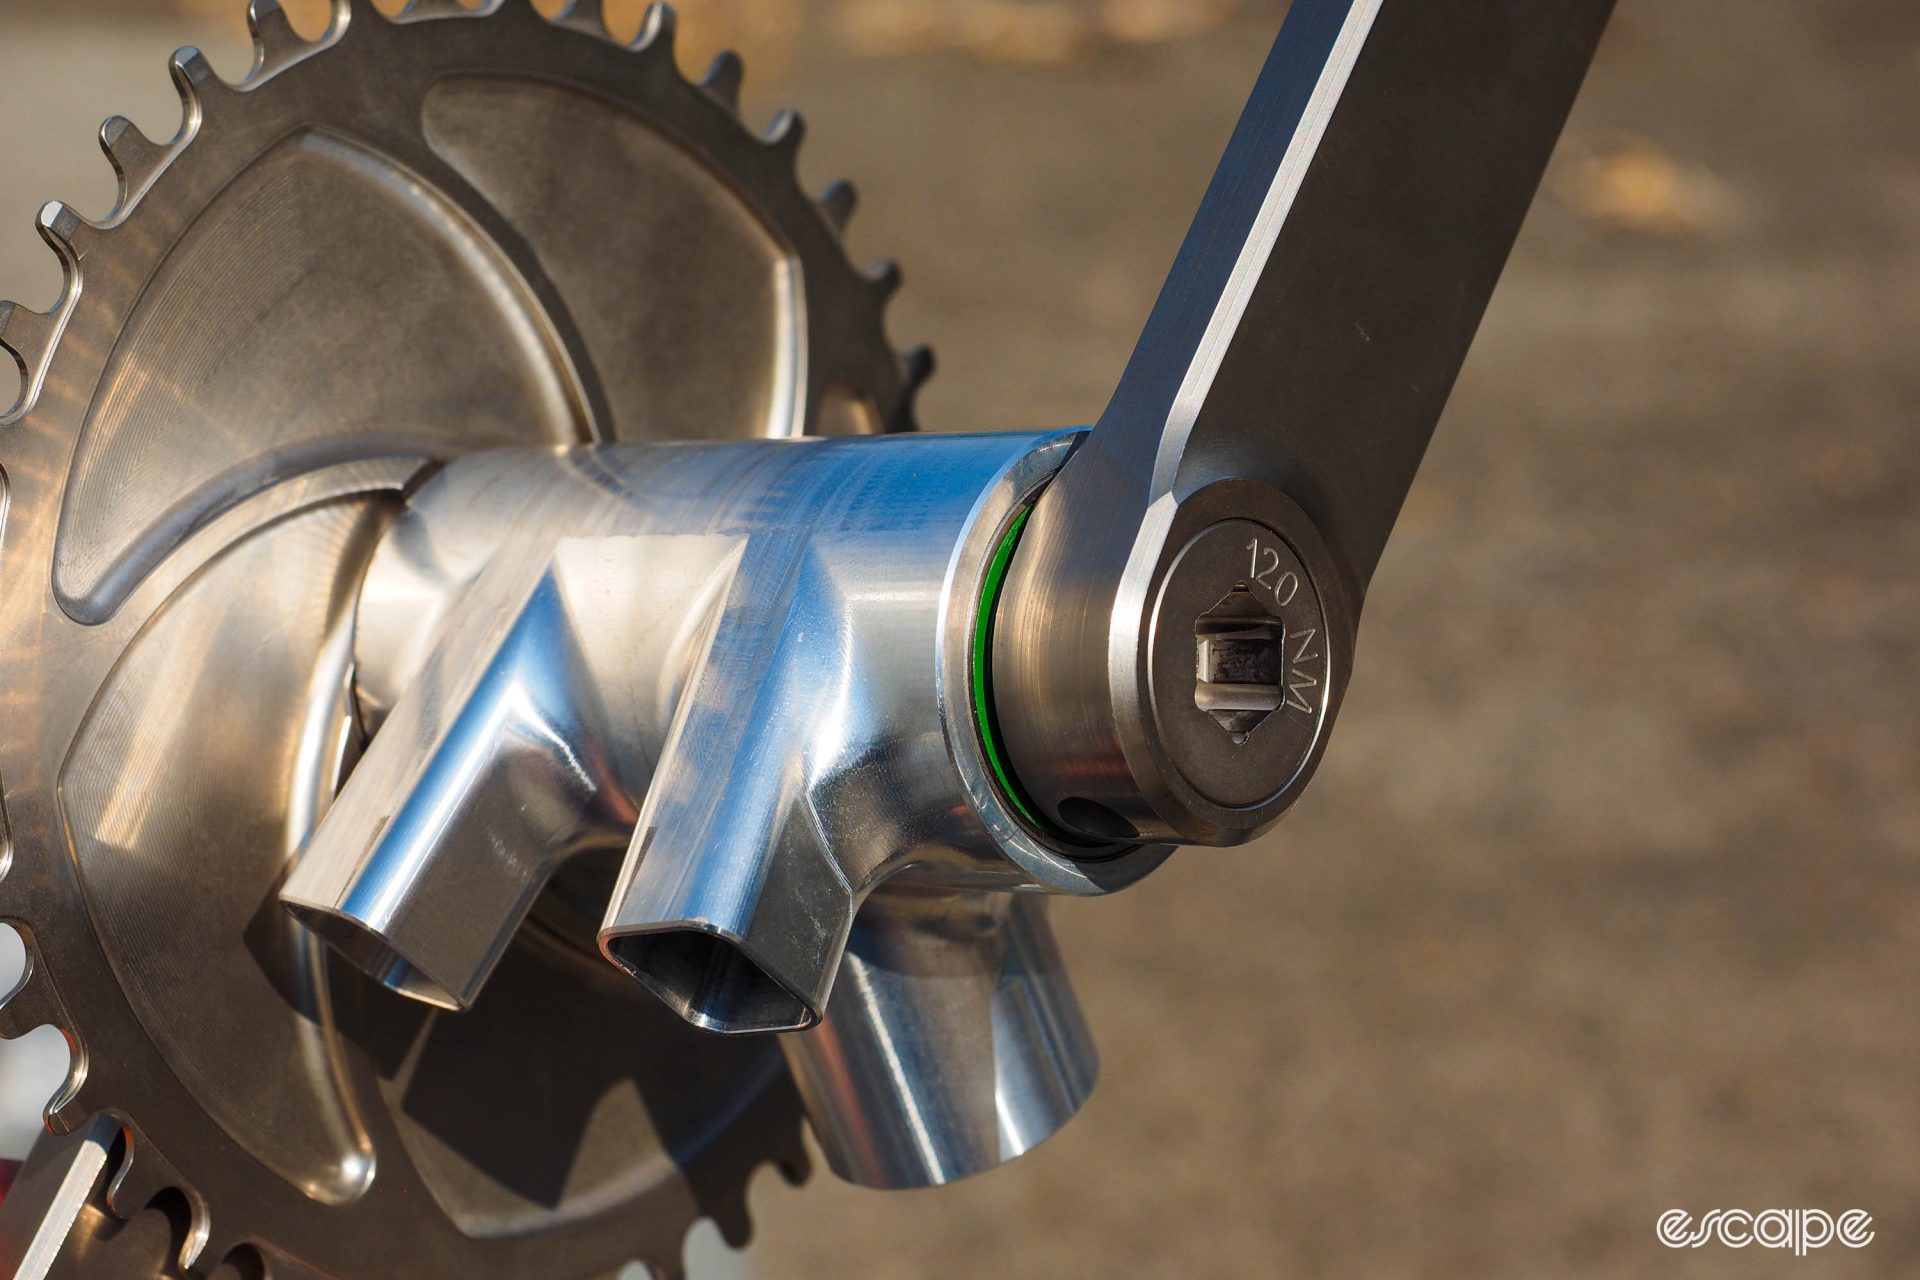 Detail shot of bottom bracket area, showing cranks and bearings in situ.